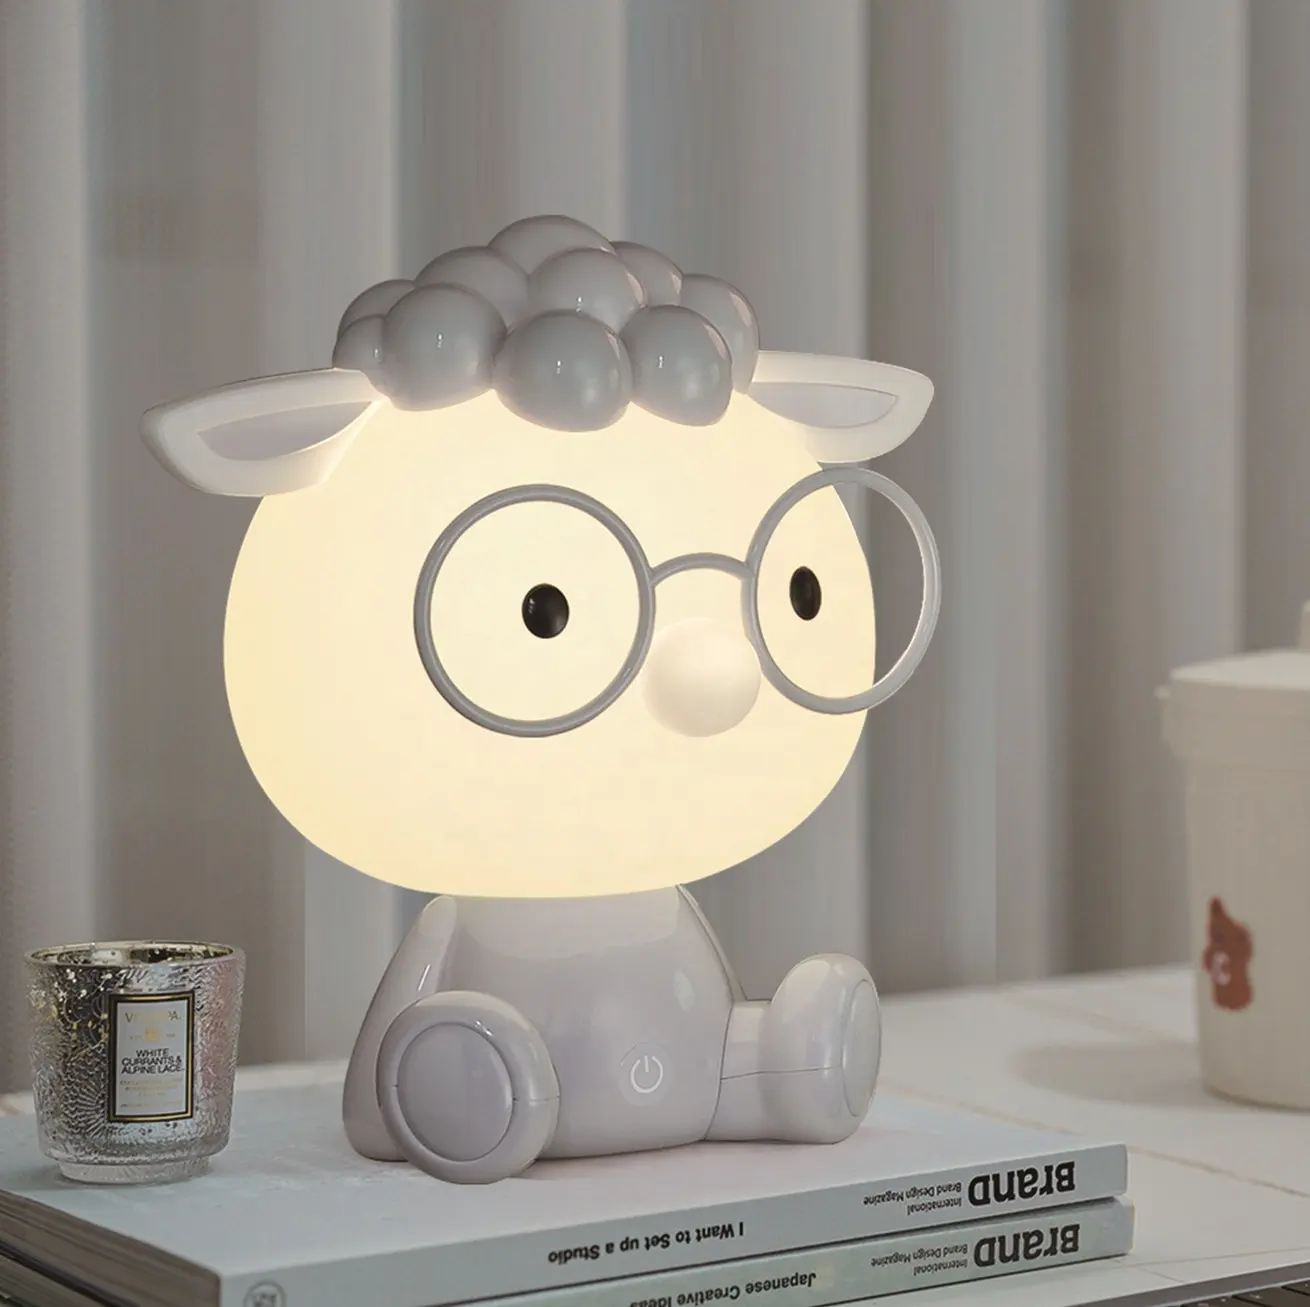 2021 New idea product creative cartoon animal lamps kids led night light for bedroom